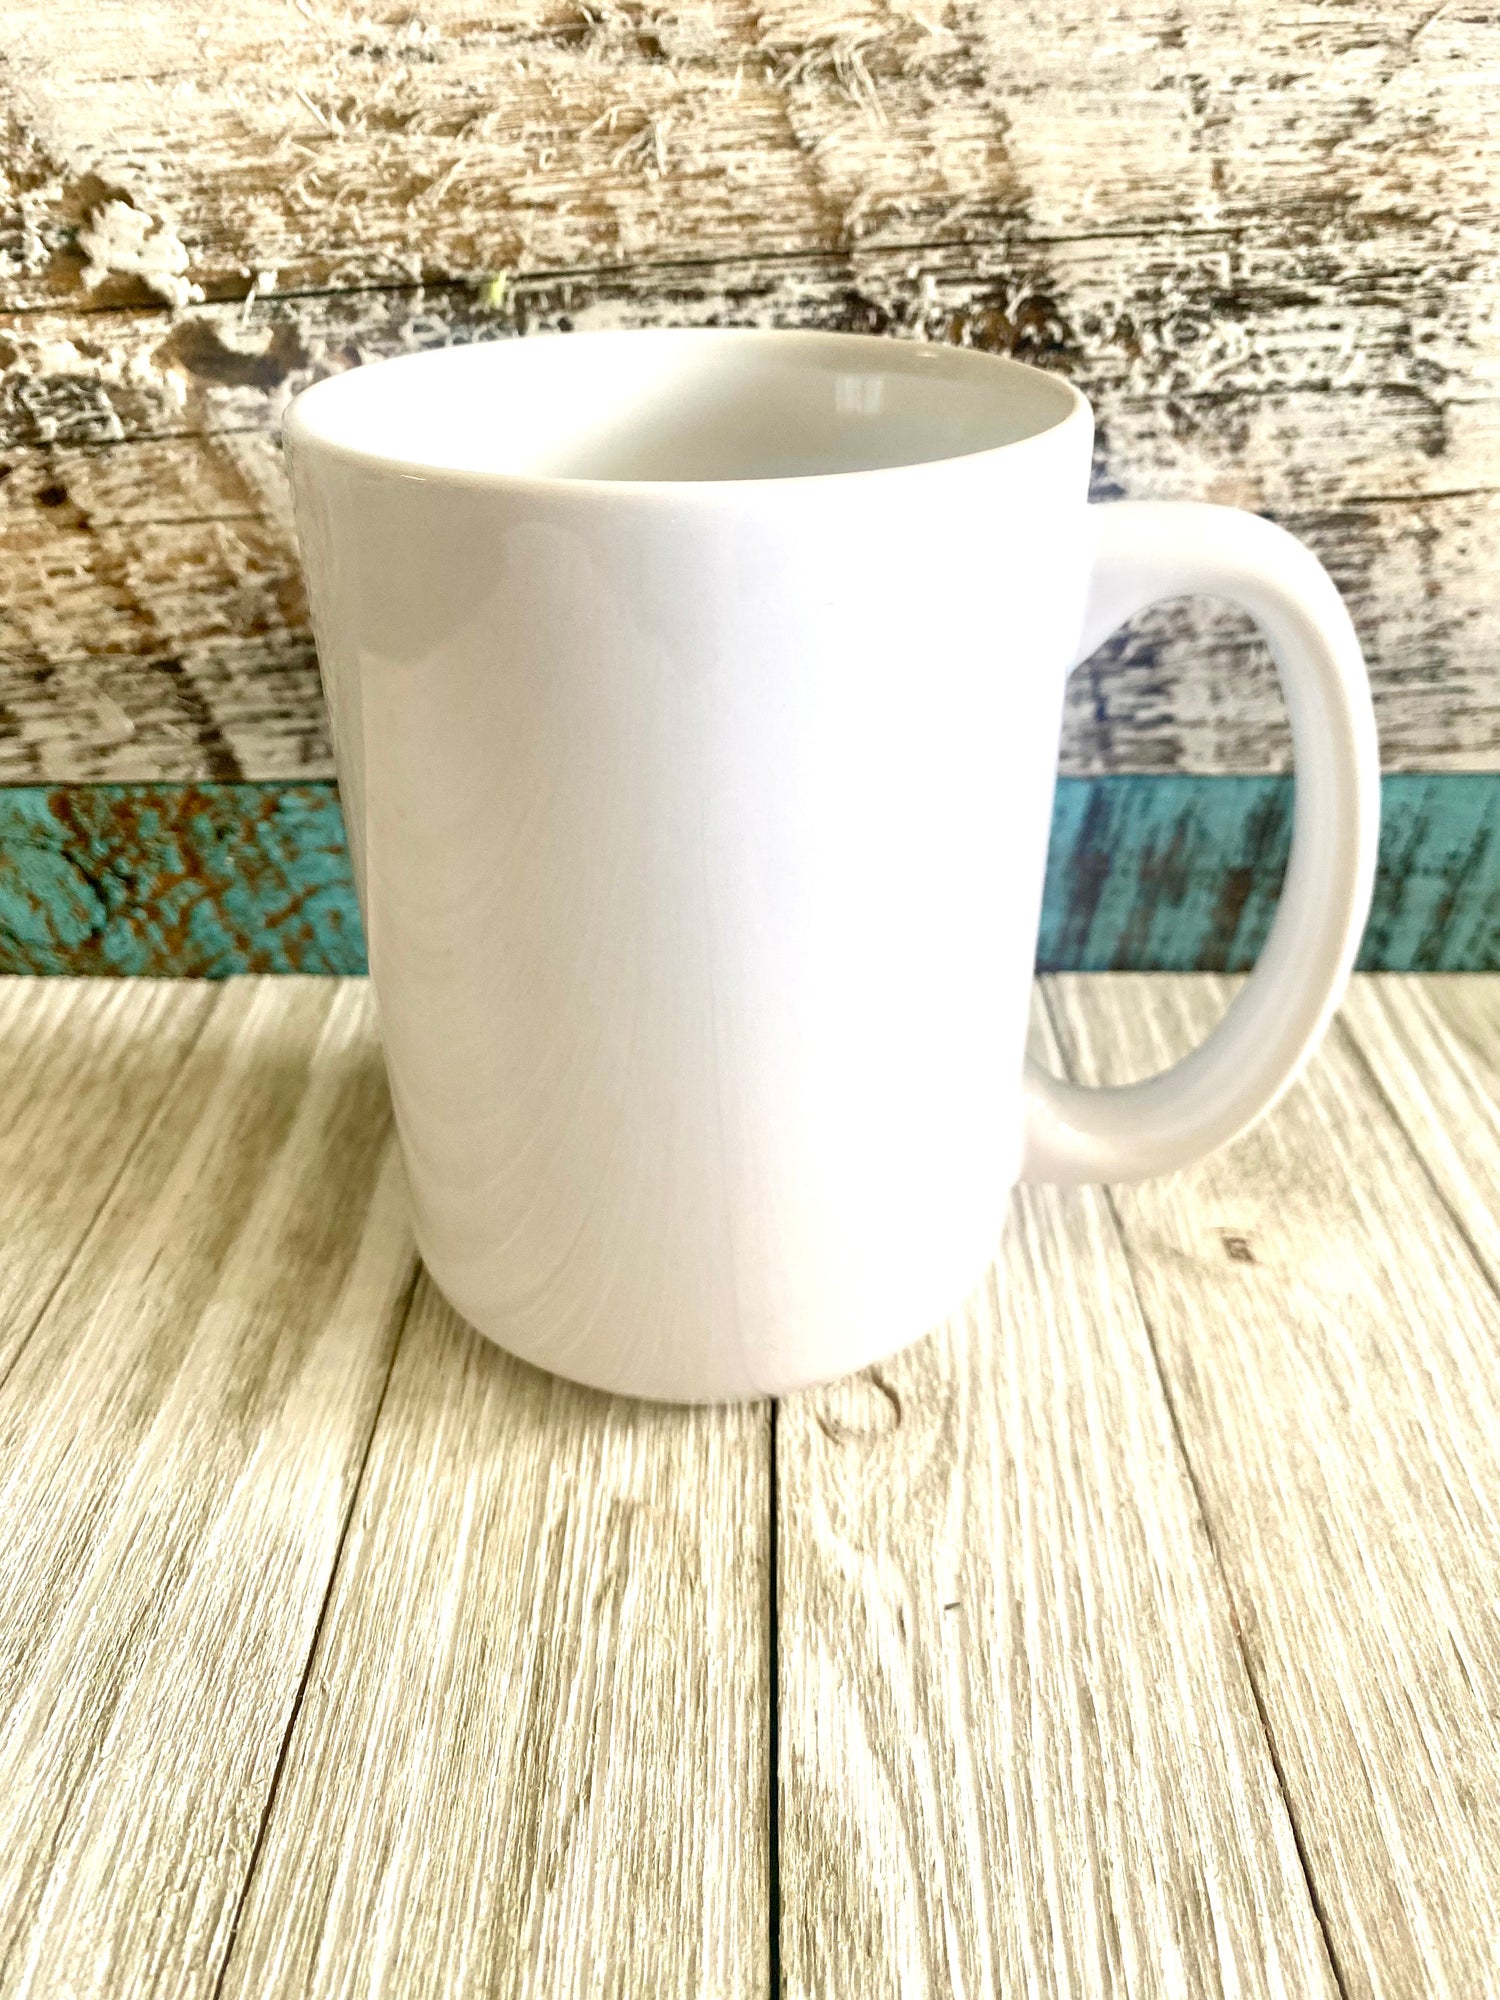 Ceramic coffee cup, 15 oz coffee mug, Large ceramic mug, Customizable coffee vessel, Personalized ceramic drinkware, High-quality 15 oz mug, Custom design coffee cup, Coffee mug for sublimation, Durable ceramic beverage mug, Gift-ready ceramic coffee mug, Stylish 15 oz mug, Ceramic mug for hot beverages,